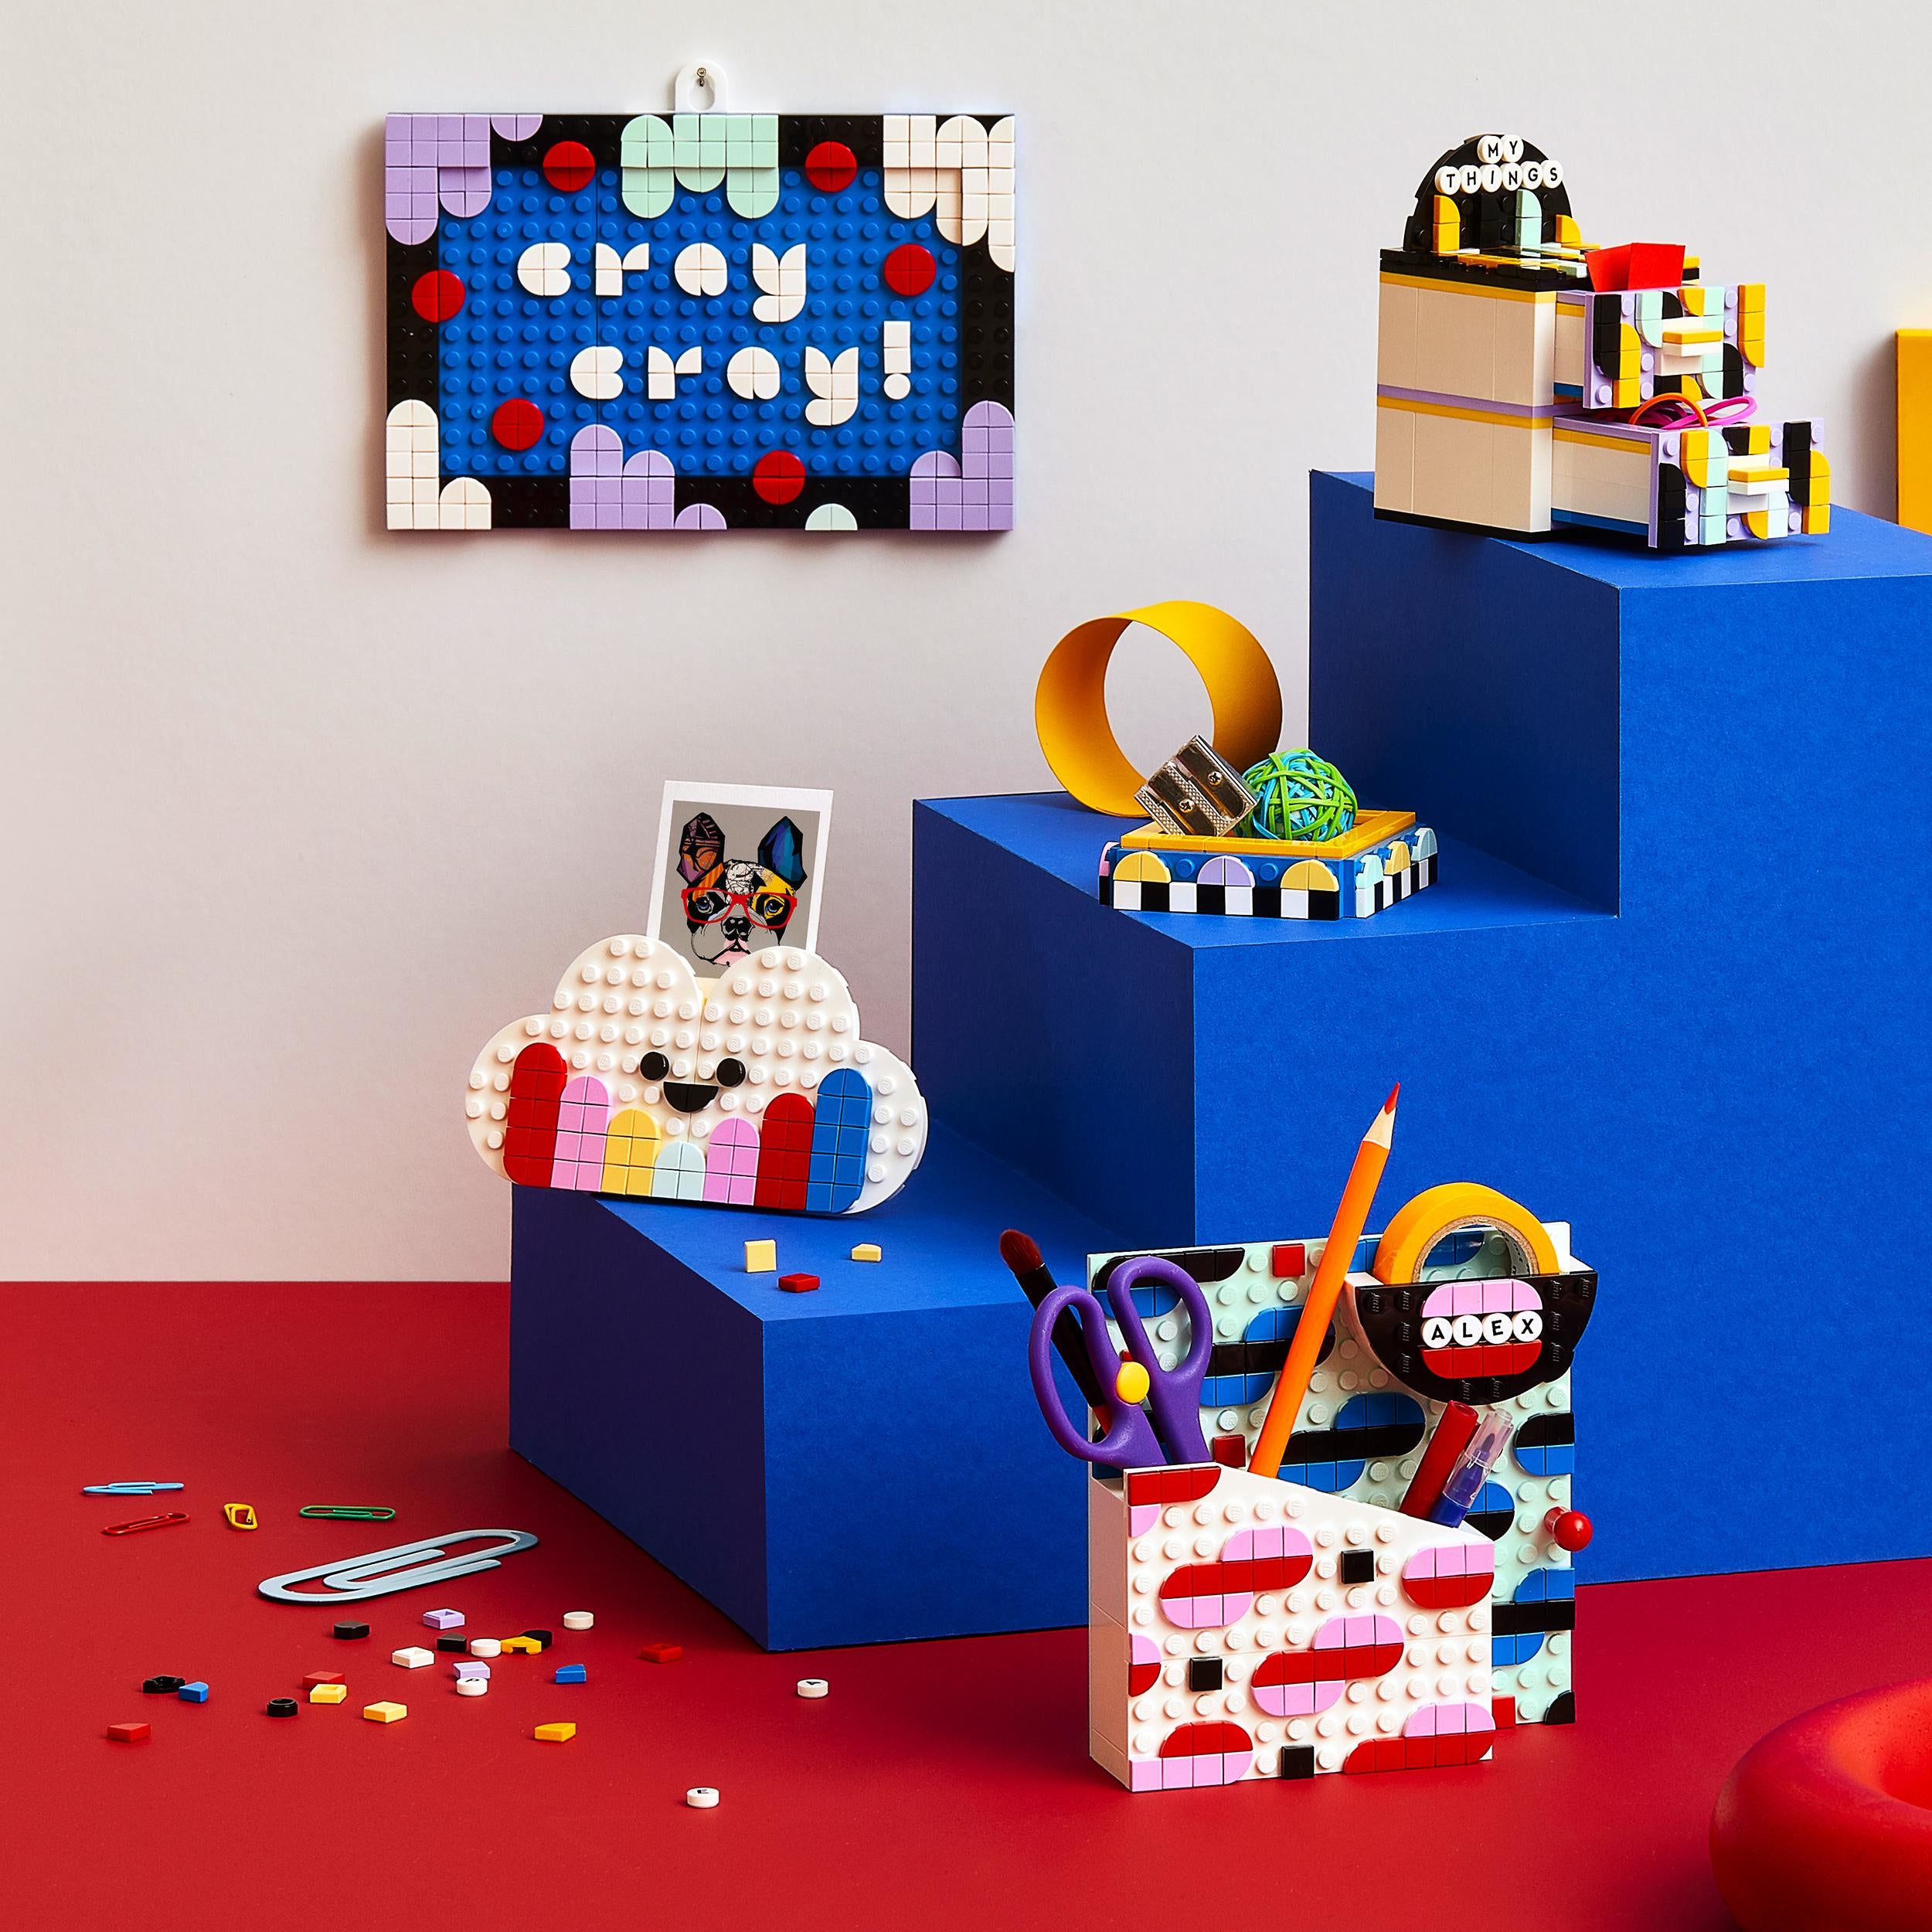 41938 LEGO® Dots - Designer Box creativa